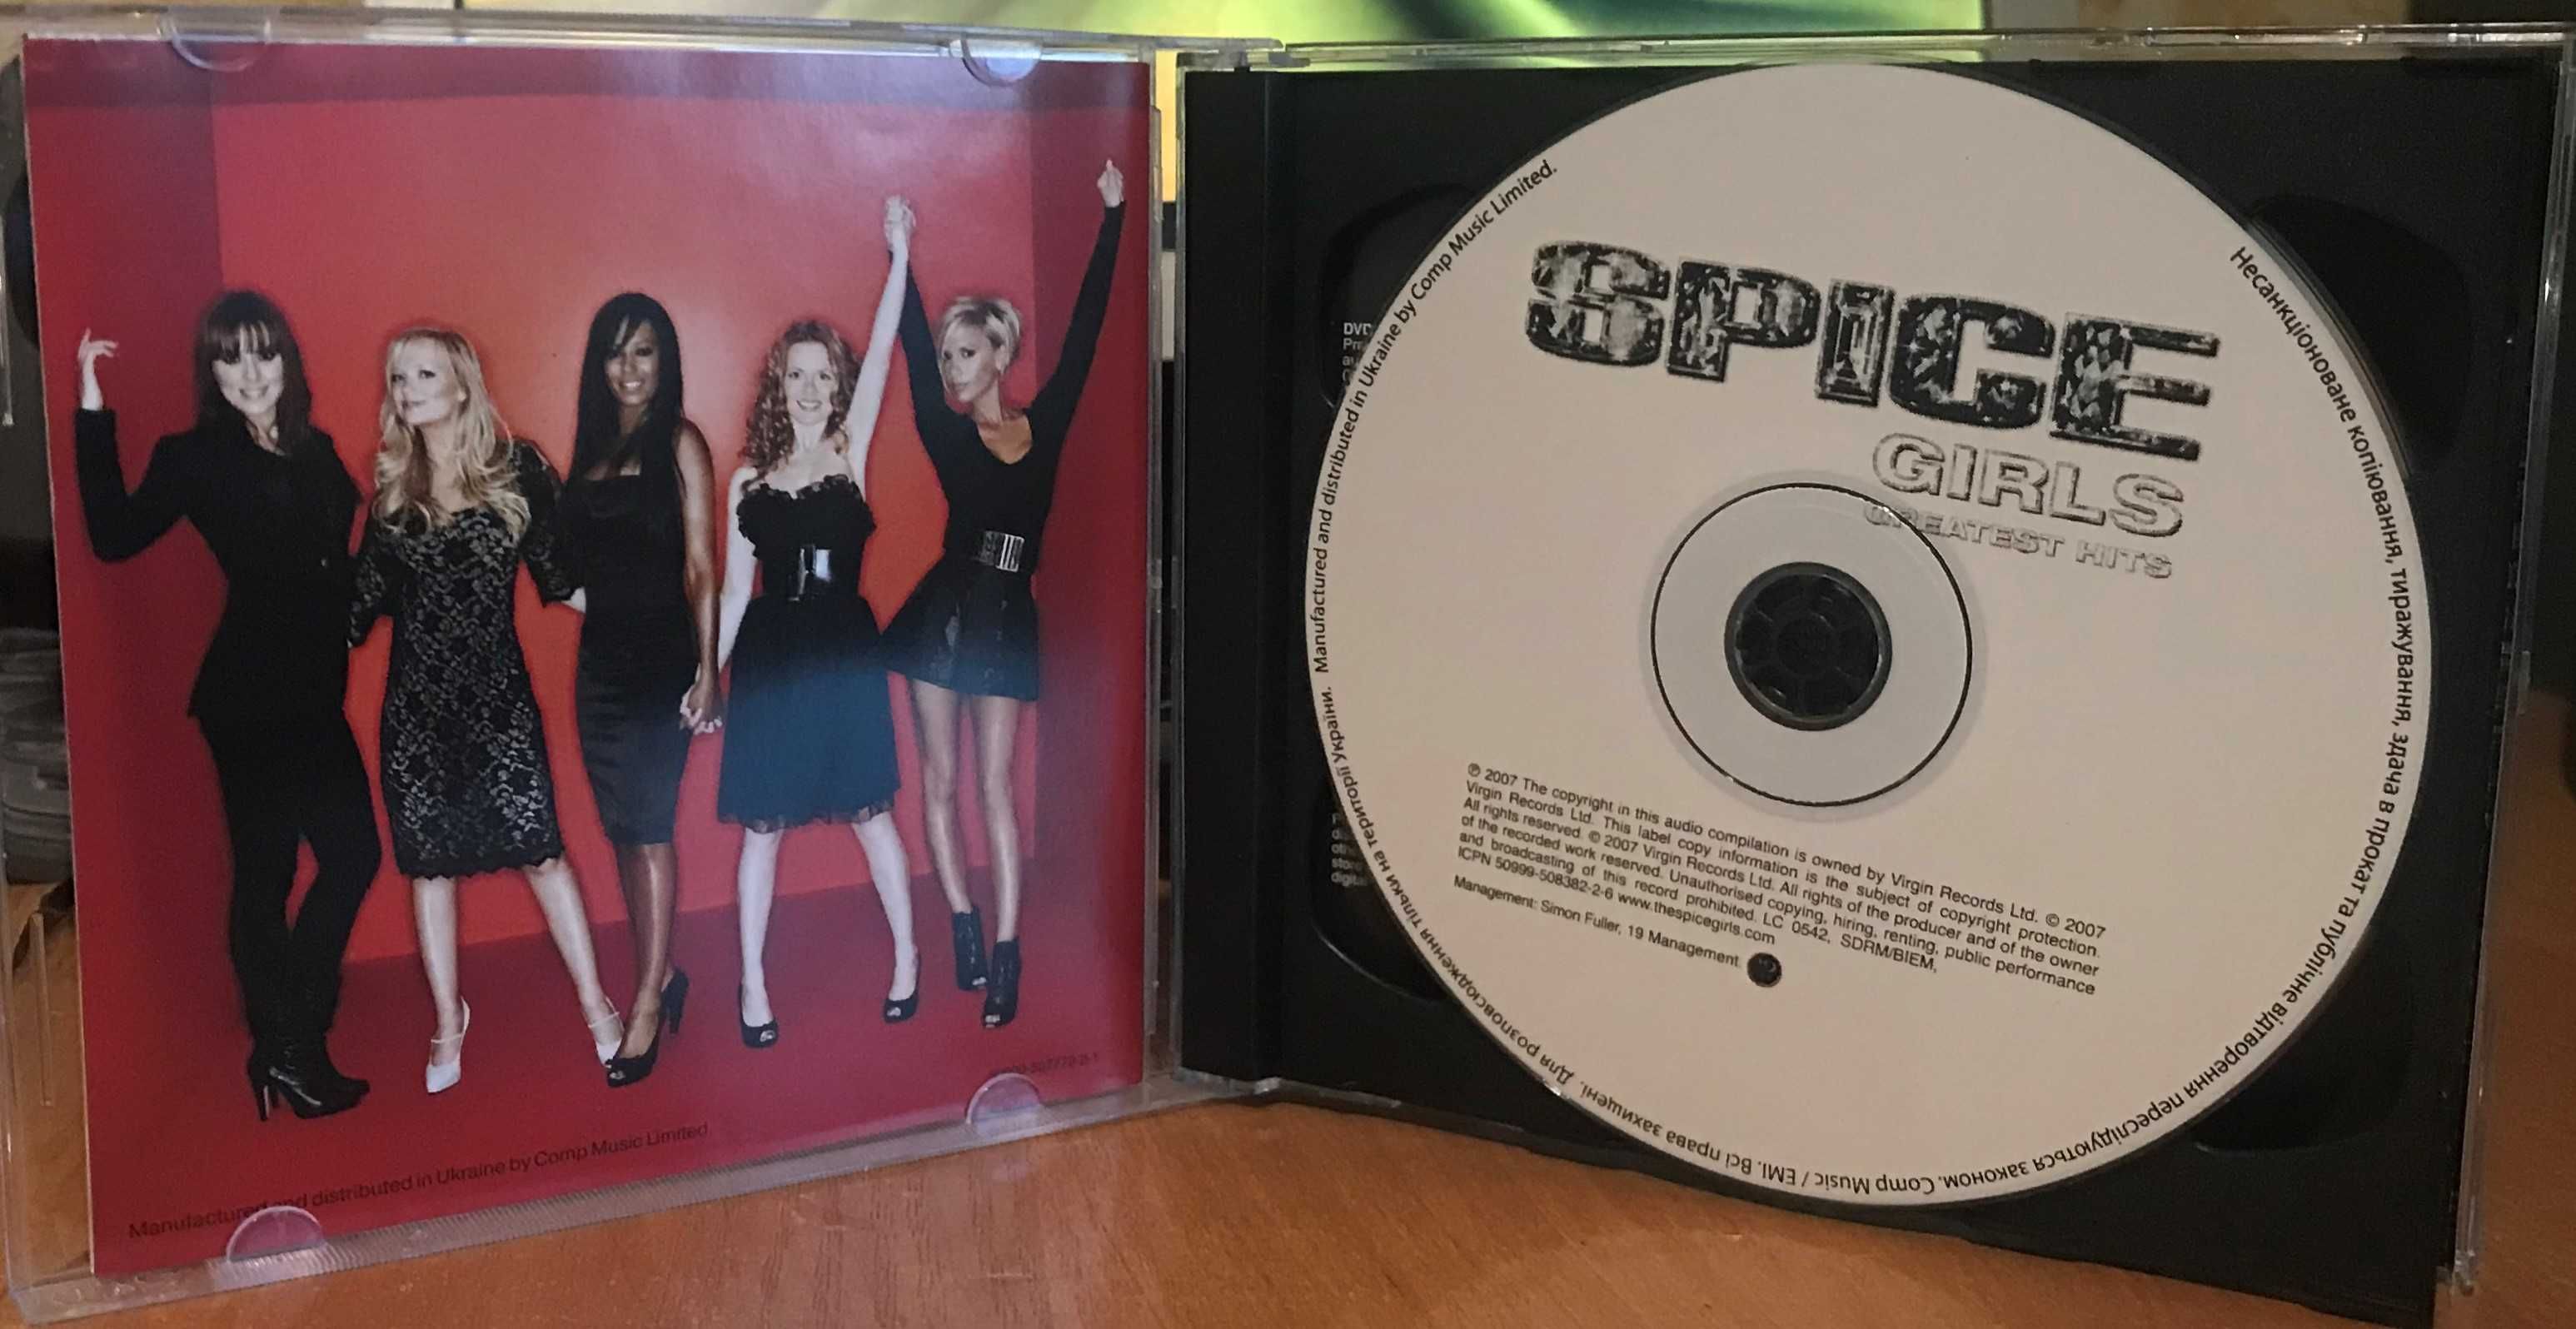 Spice Girls "Greatest Hits" (CD+DVD)